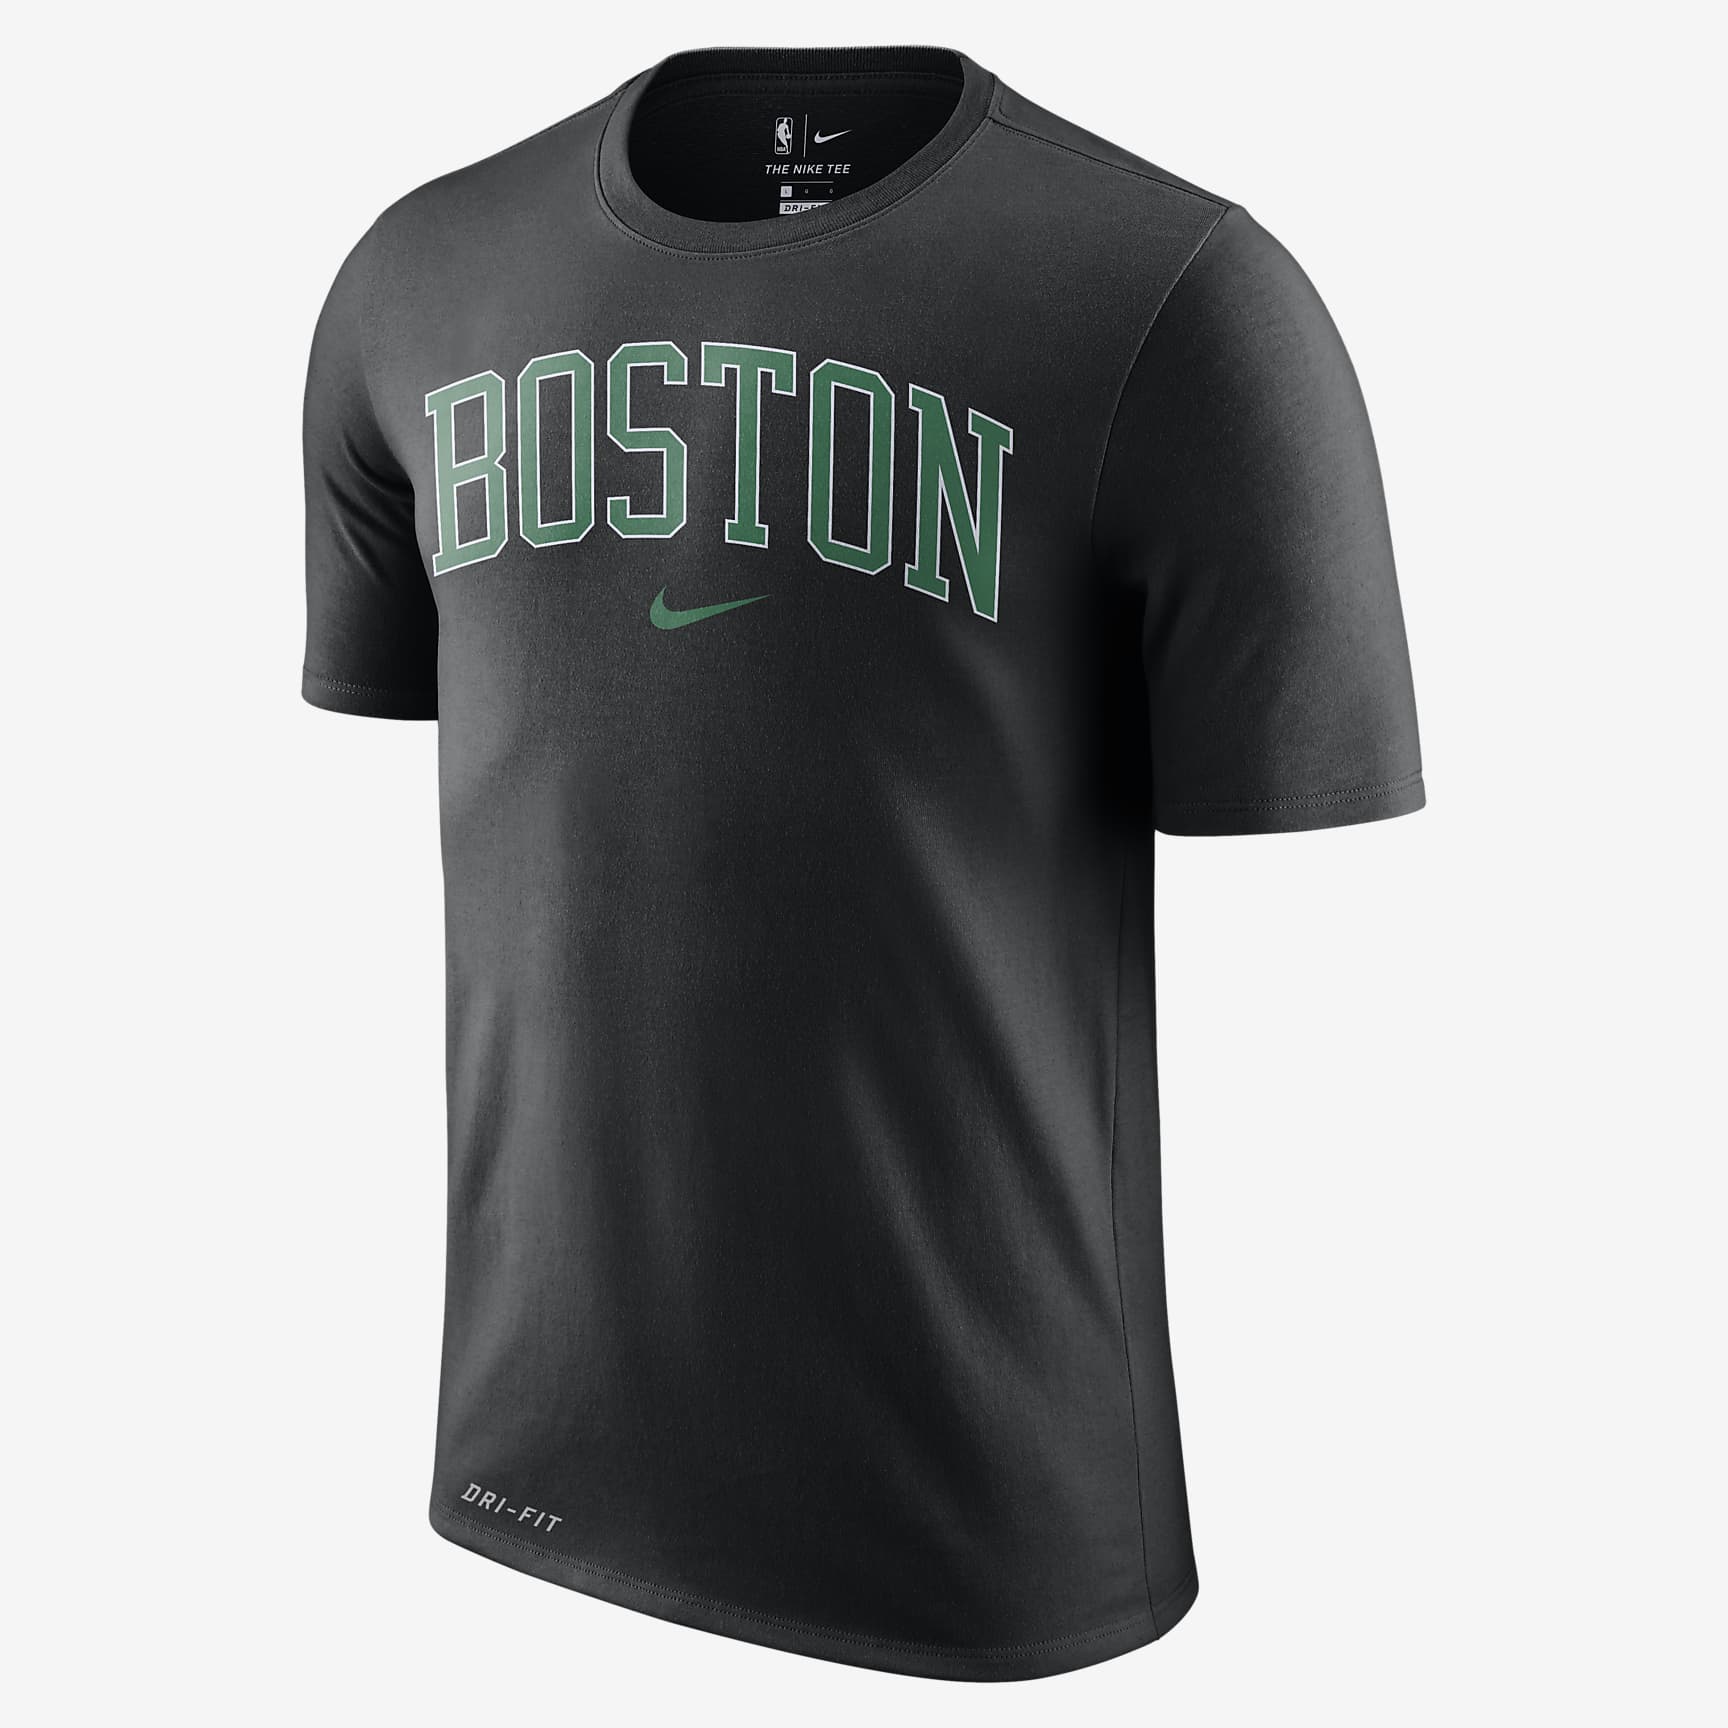 Playera de la NBA para hombre Boston Celtics Nike Dri-FIT. Nike.com